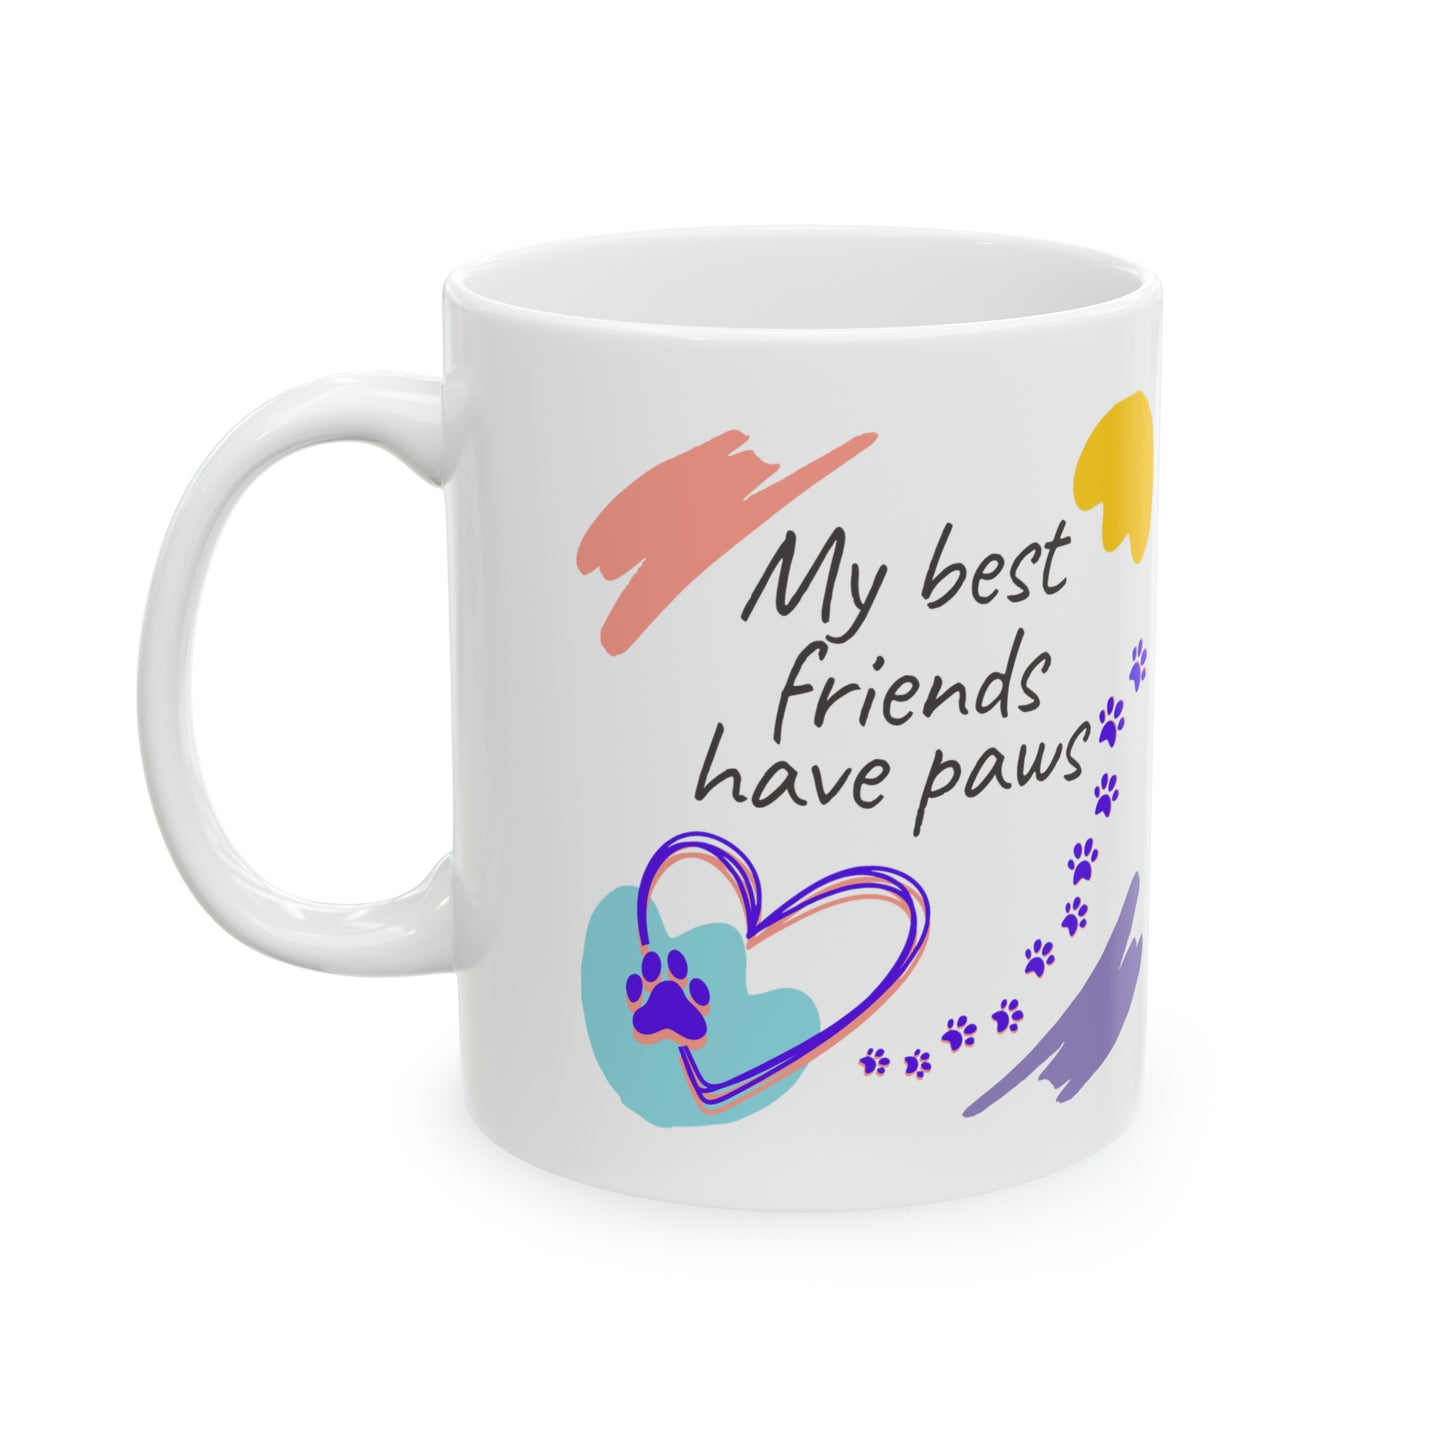 Cat Lady Coffee Mug - "My best friends have paws" Design - Ceramic - 11oz